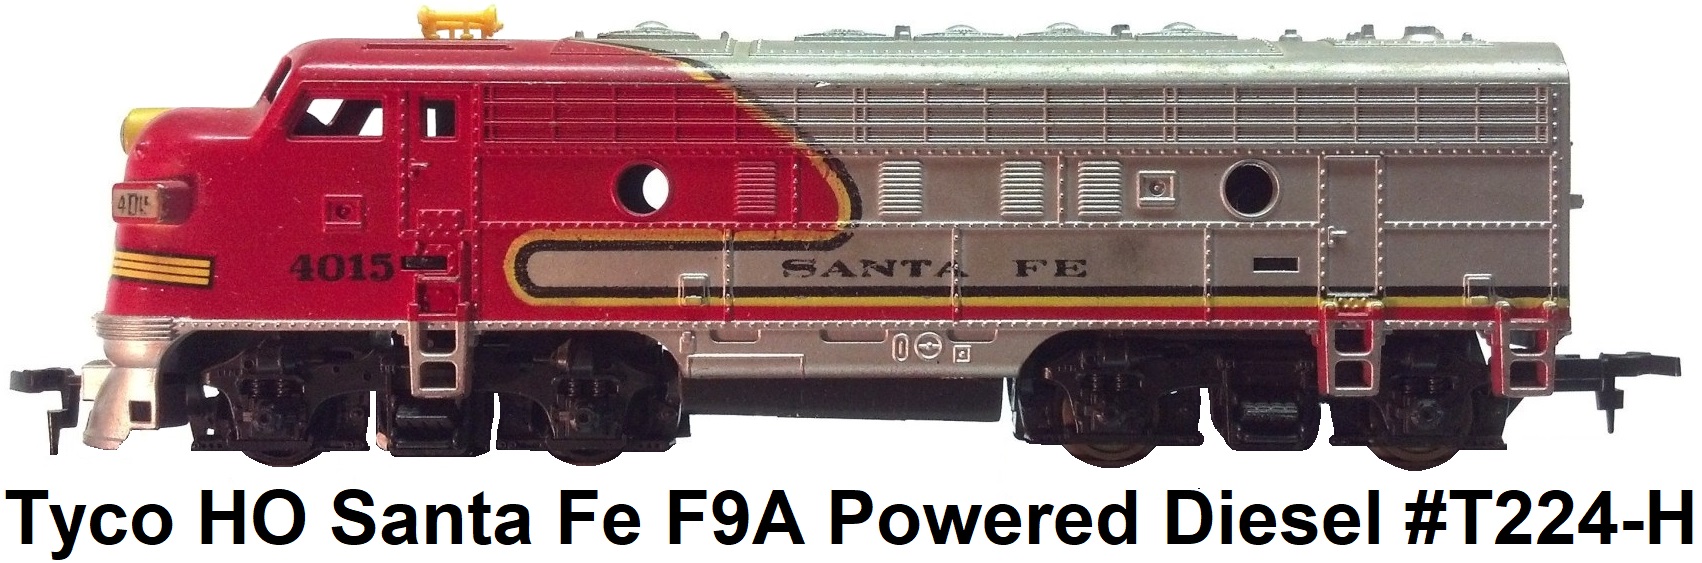 Tyco HO Santa Fe F9A Powered Diesel #T224-H